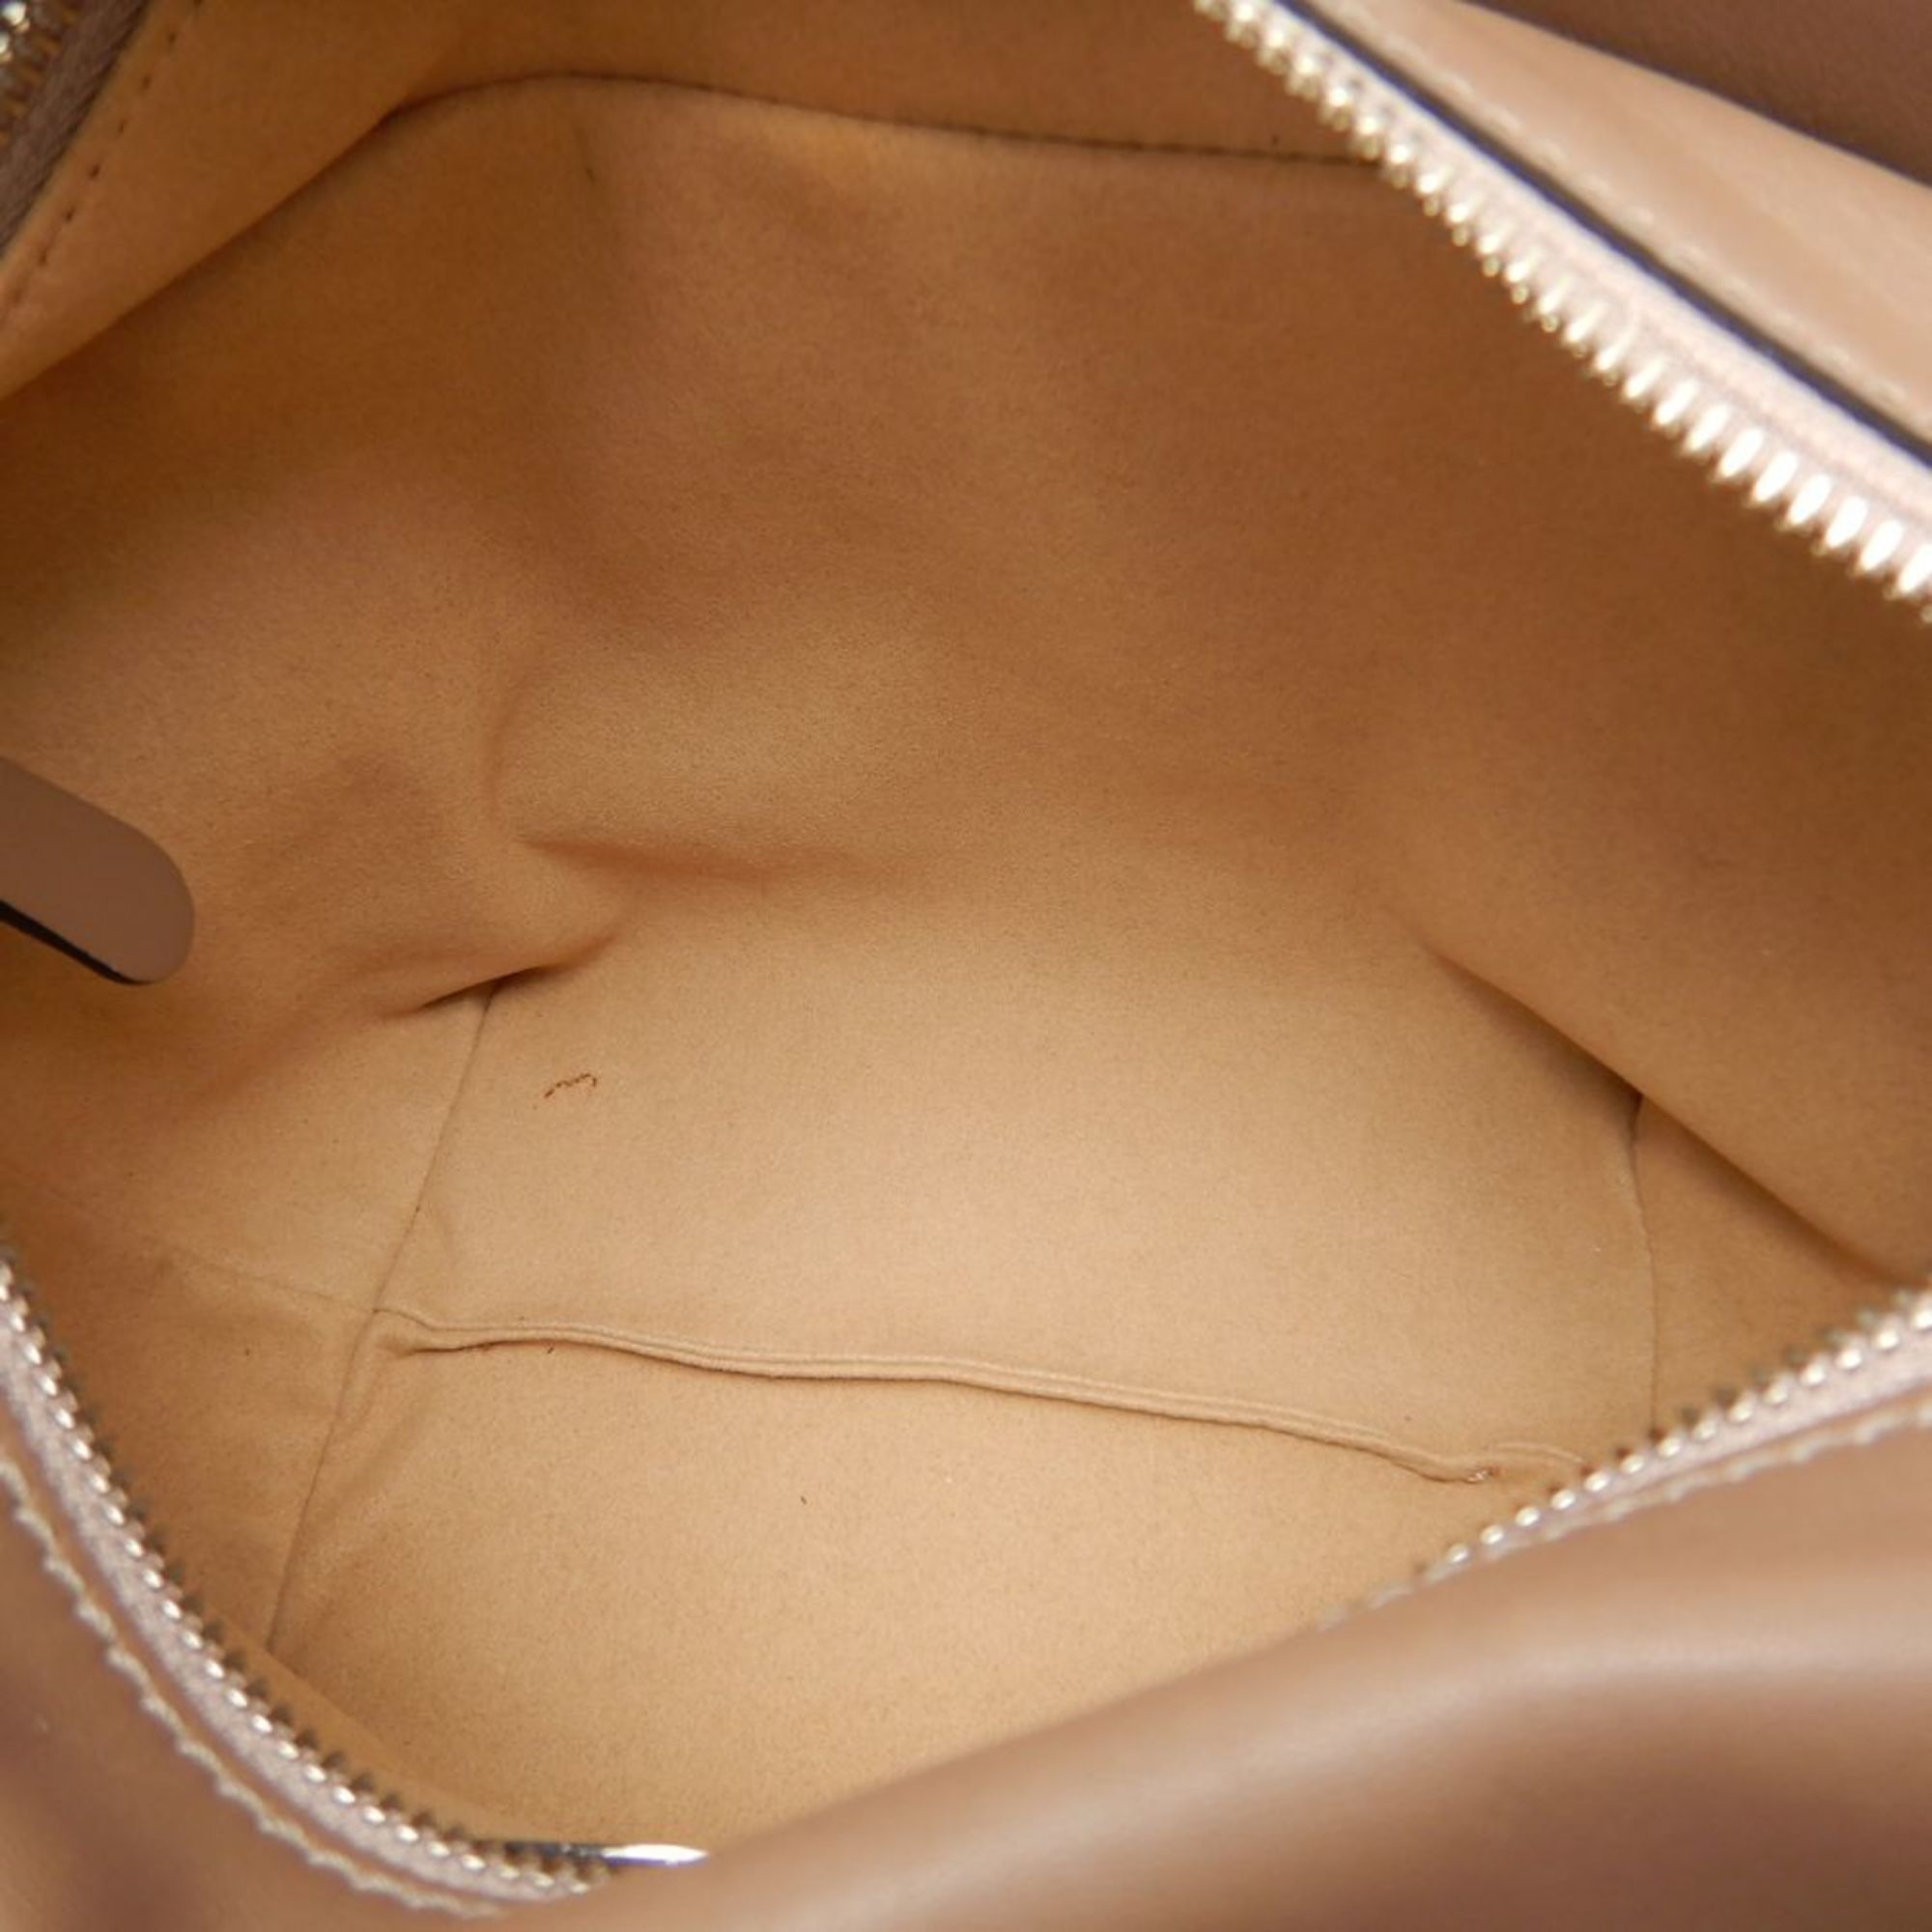 JIMMY CHOO Sarah handbag, star studs, leather, brown, 251742